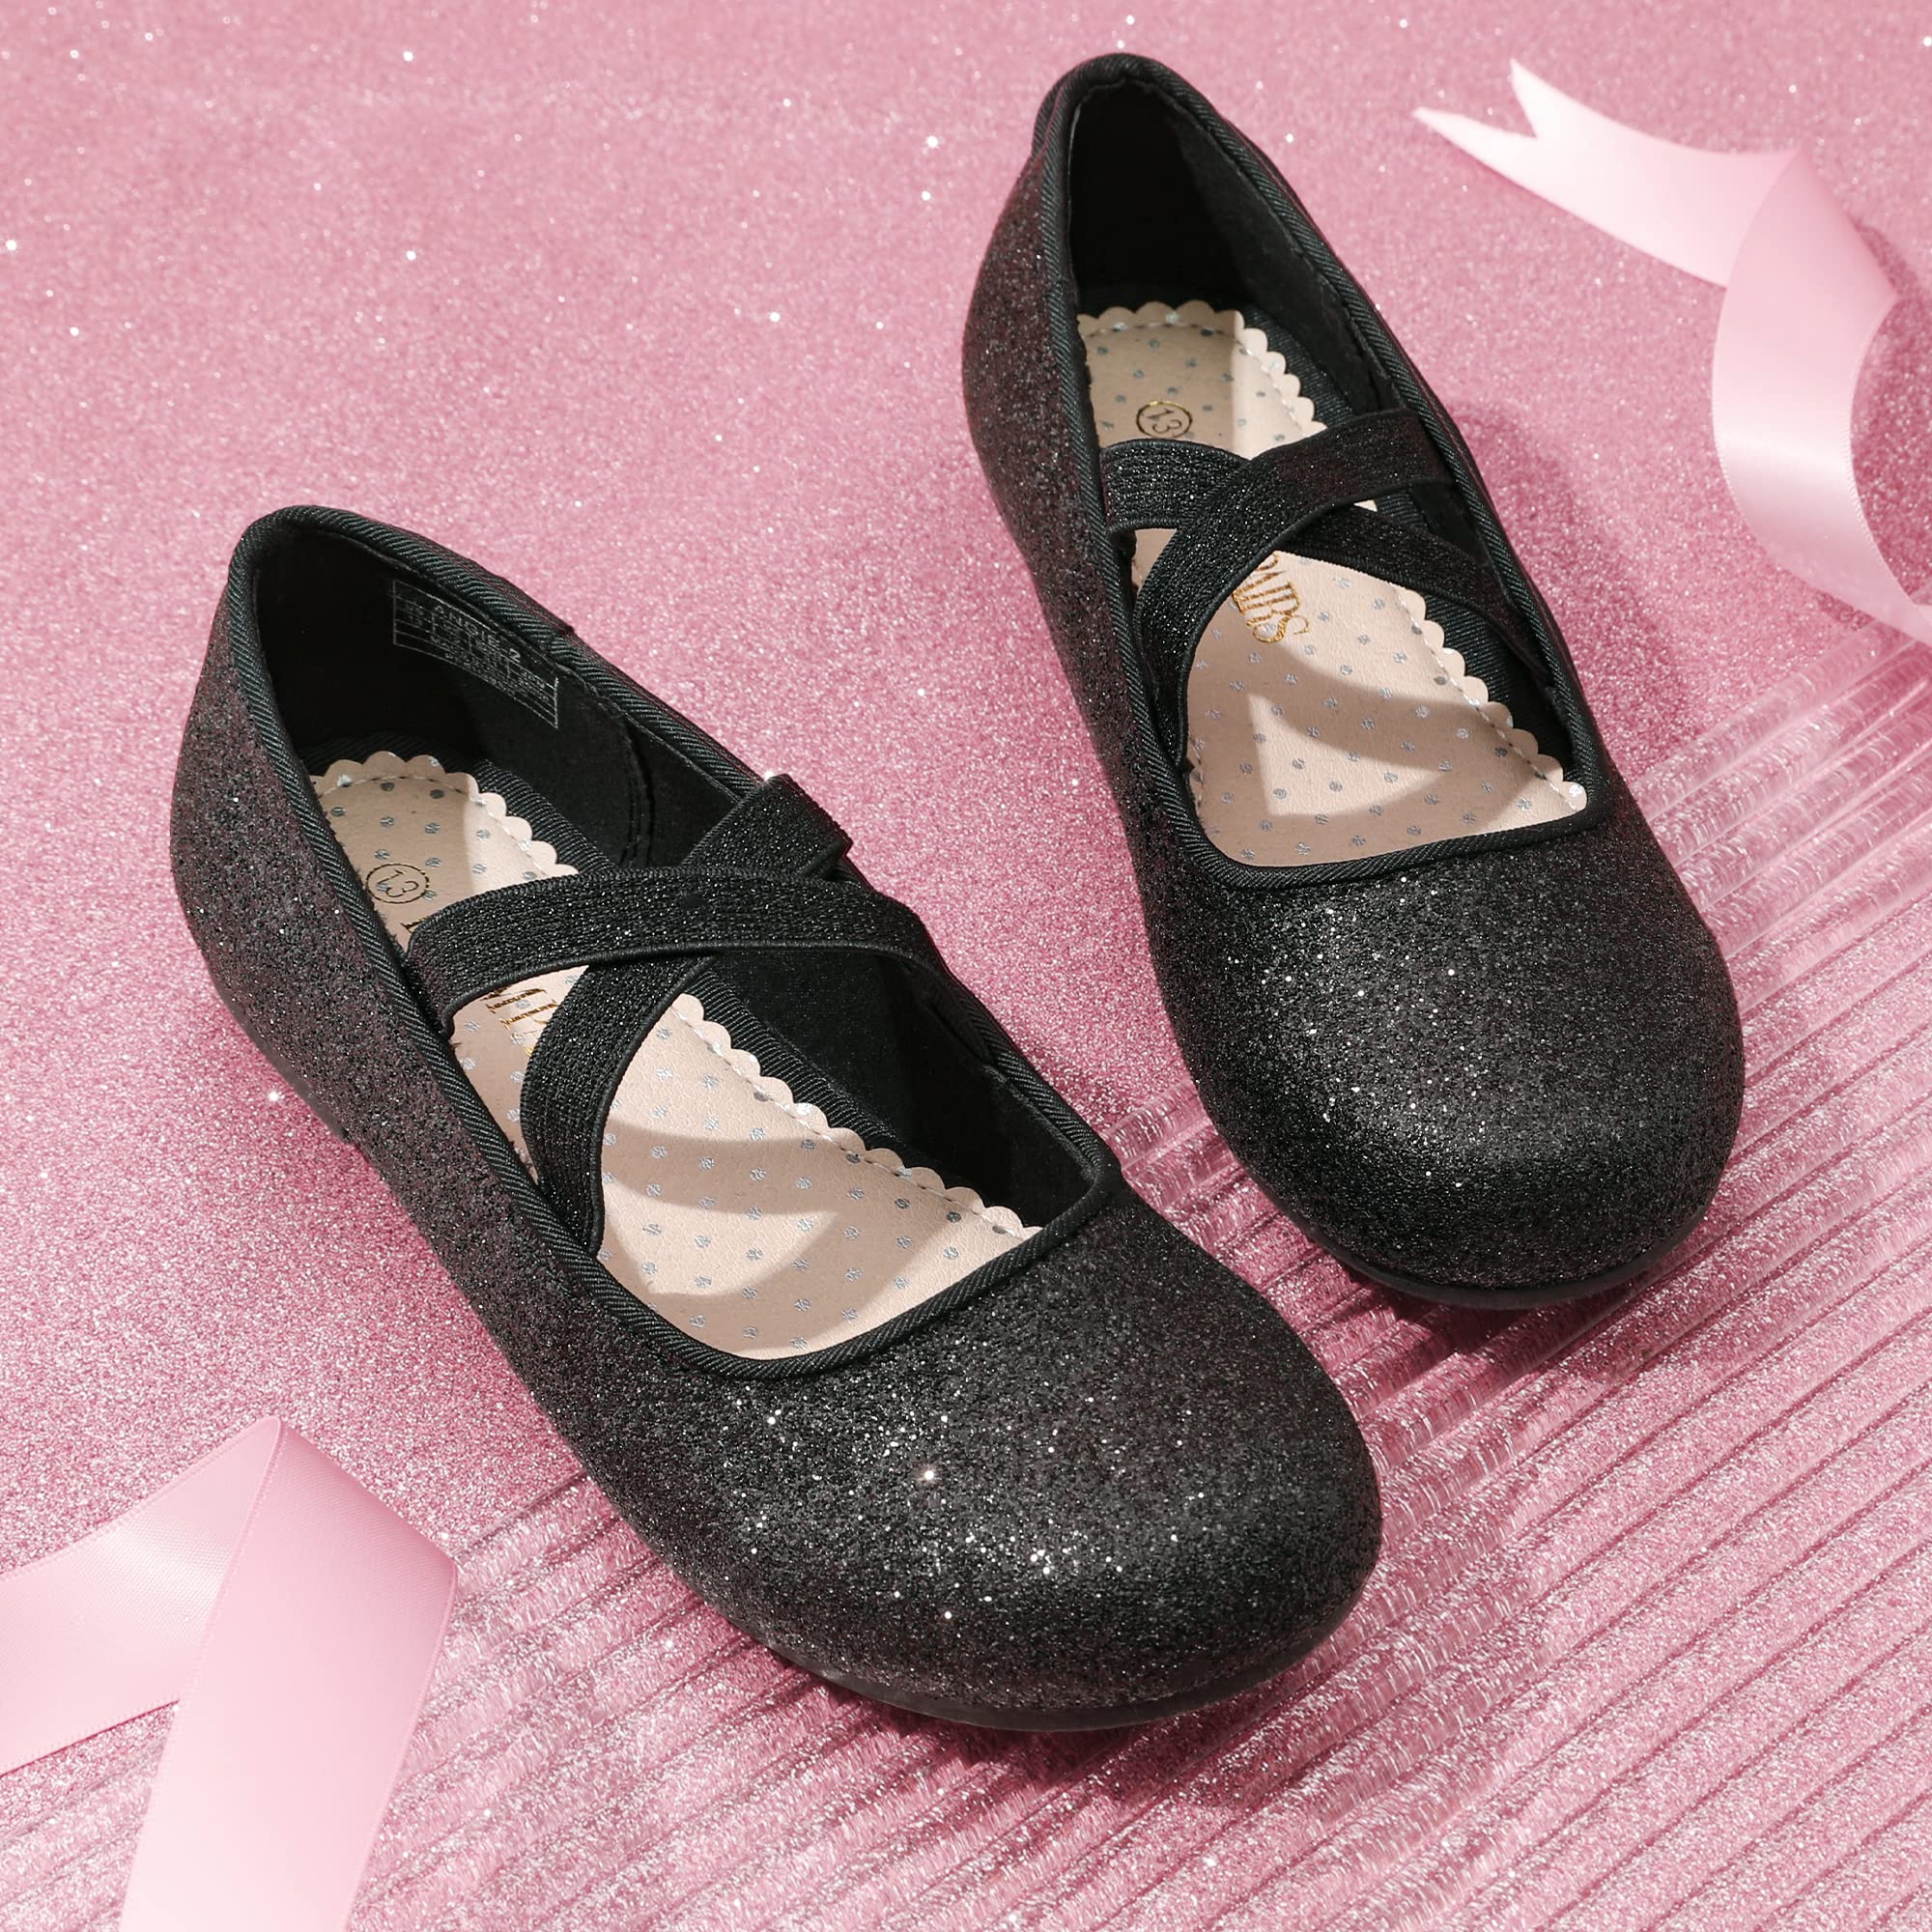 DREAM PAIRS Girls Ballerina Dress Shoes Mary Jane Flats